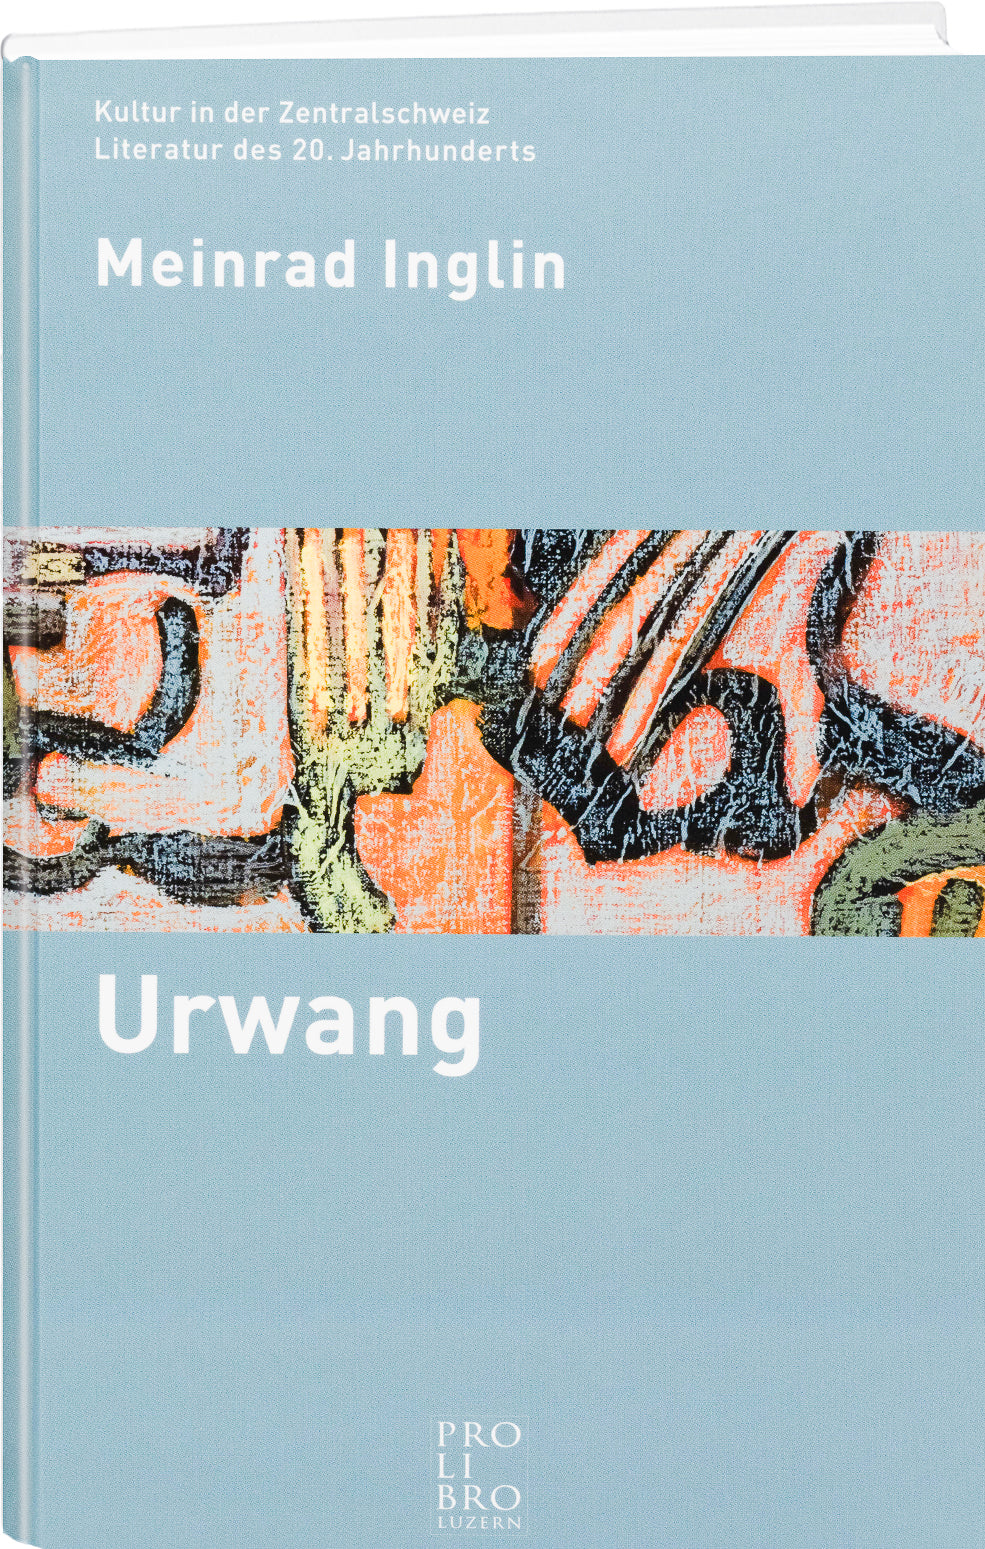 Meinrad Inglin: Urwang - prolibro.ch